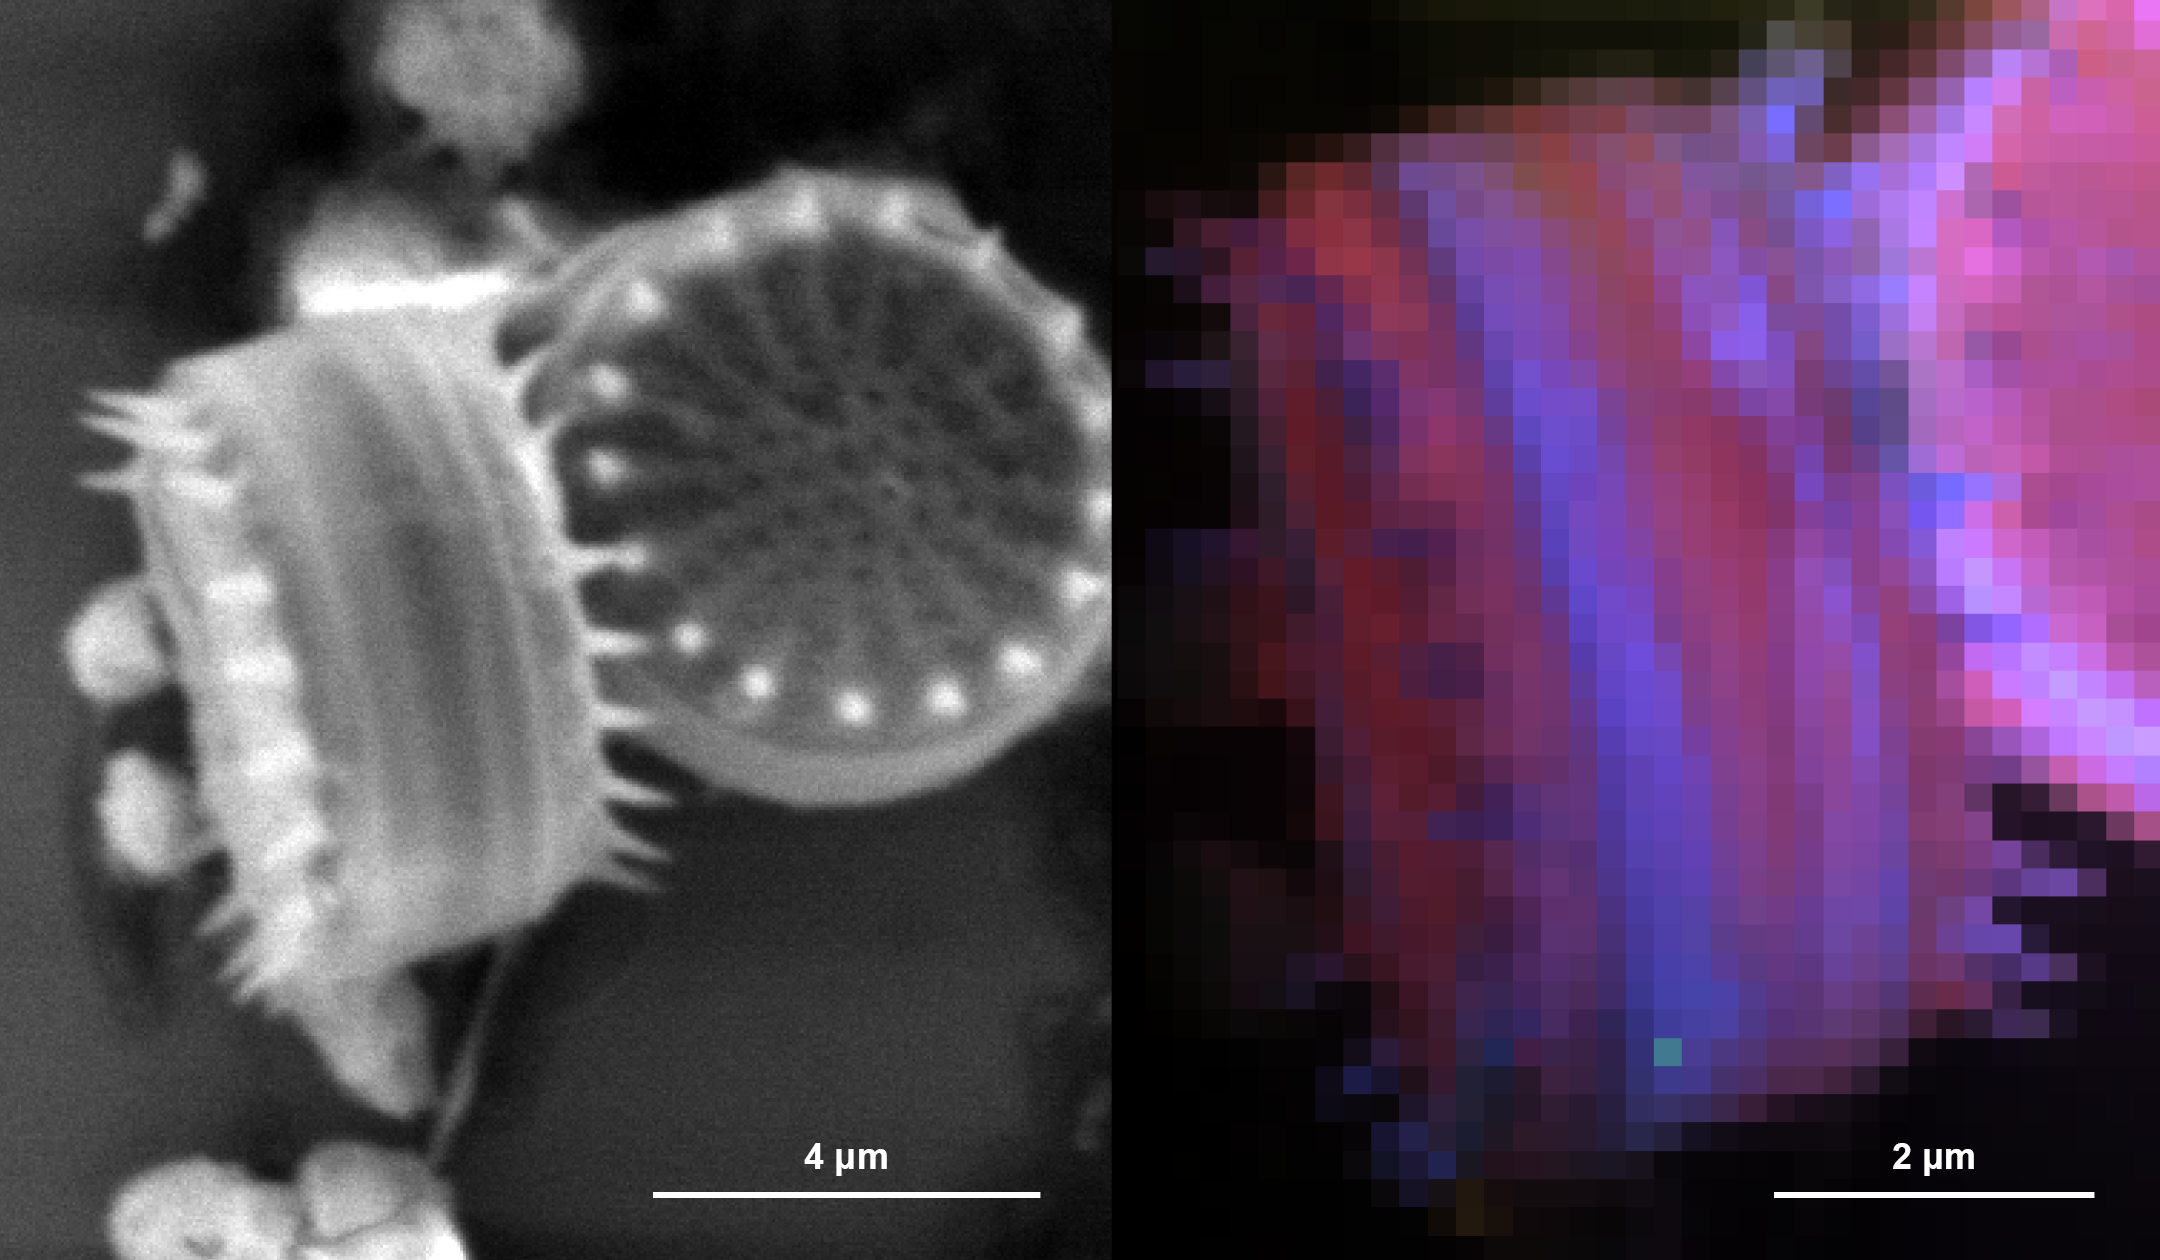 microorganisms imaged using cathodoluminescence